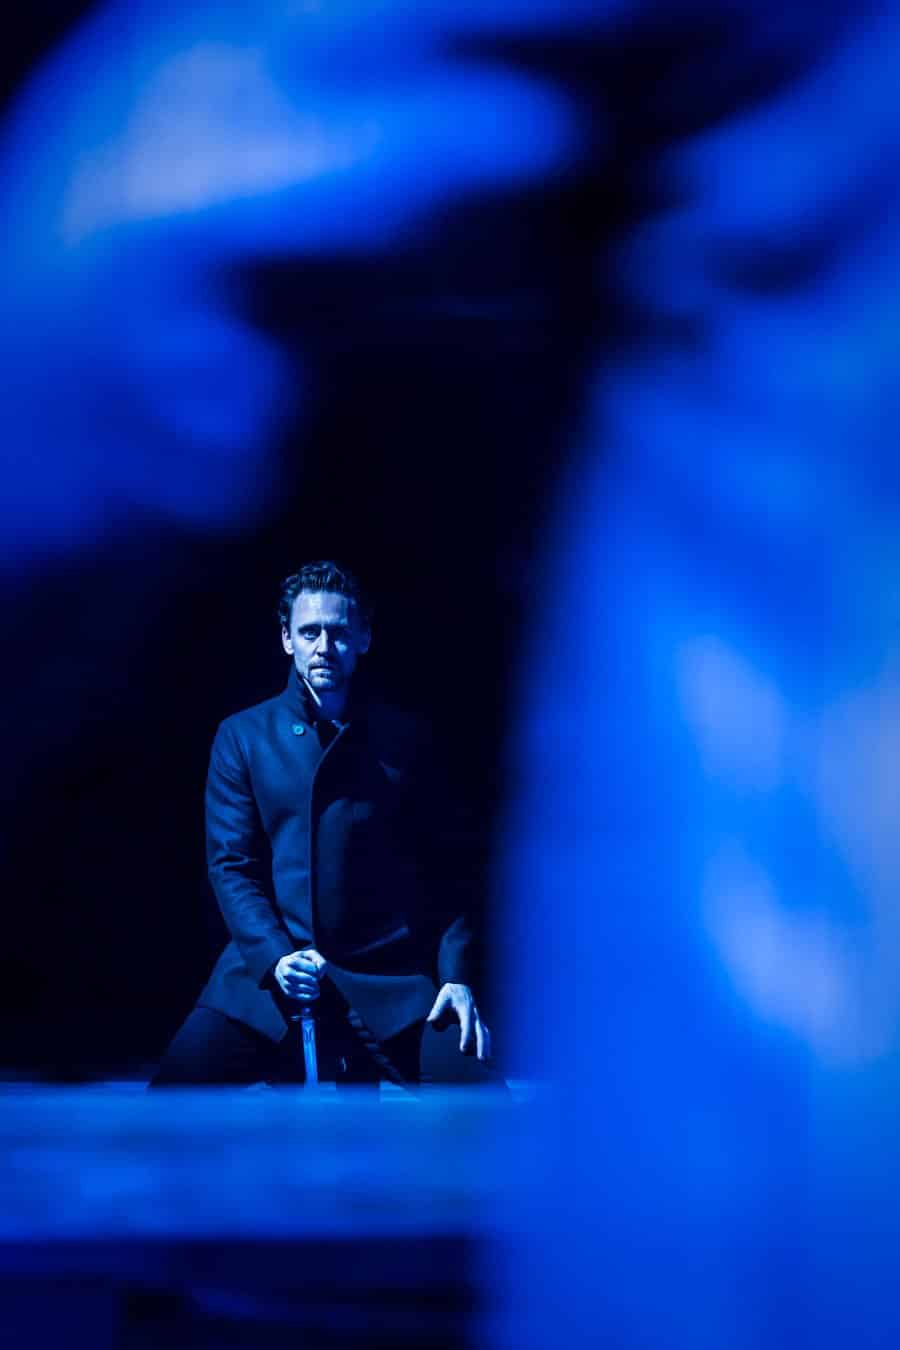 Tom Hiddleston in Hamlet